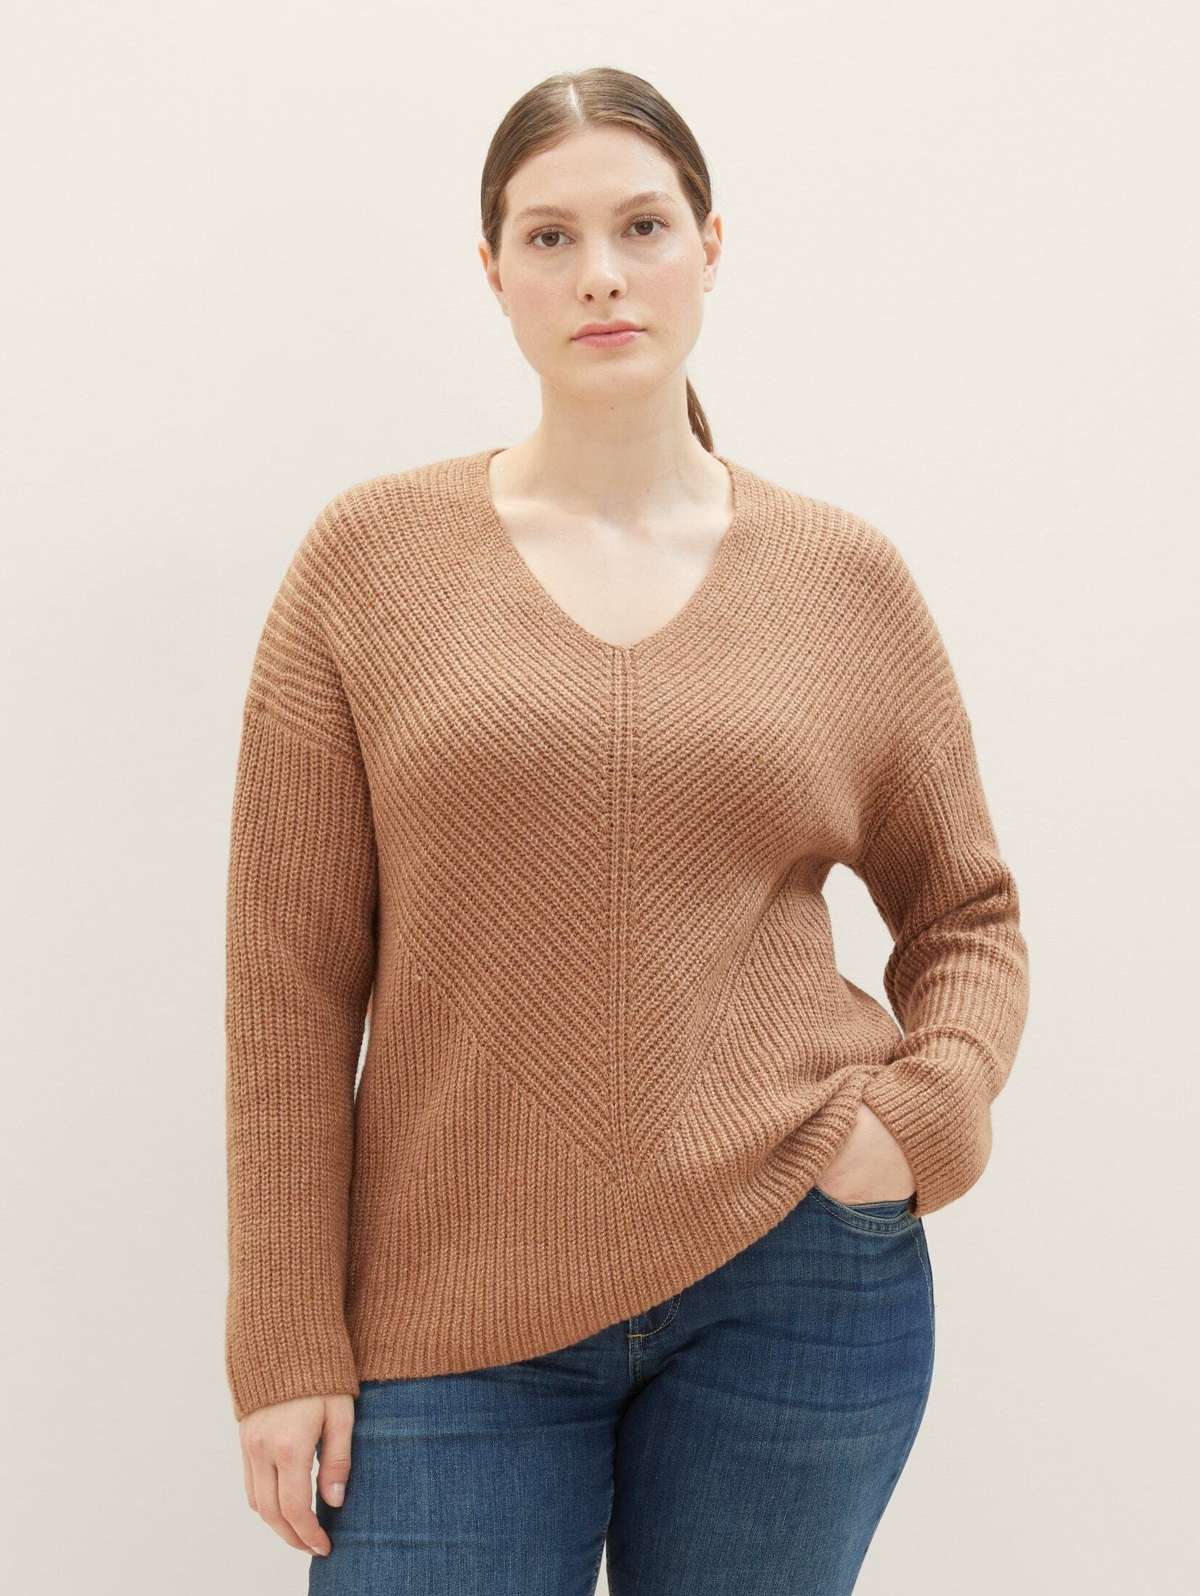 Knitted Sweater Plus - вязаный свитер с V-образным вырезом